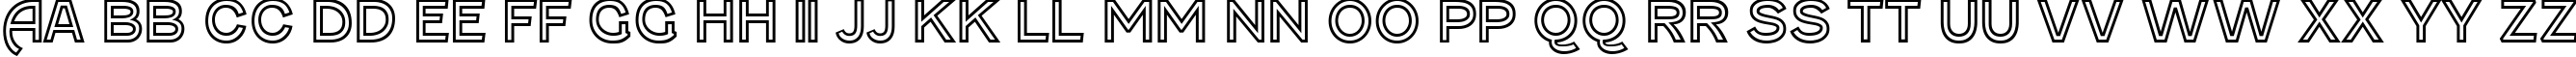 Пример написания английского алфавита шрифтом Fenwick Outline Free